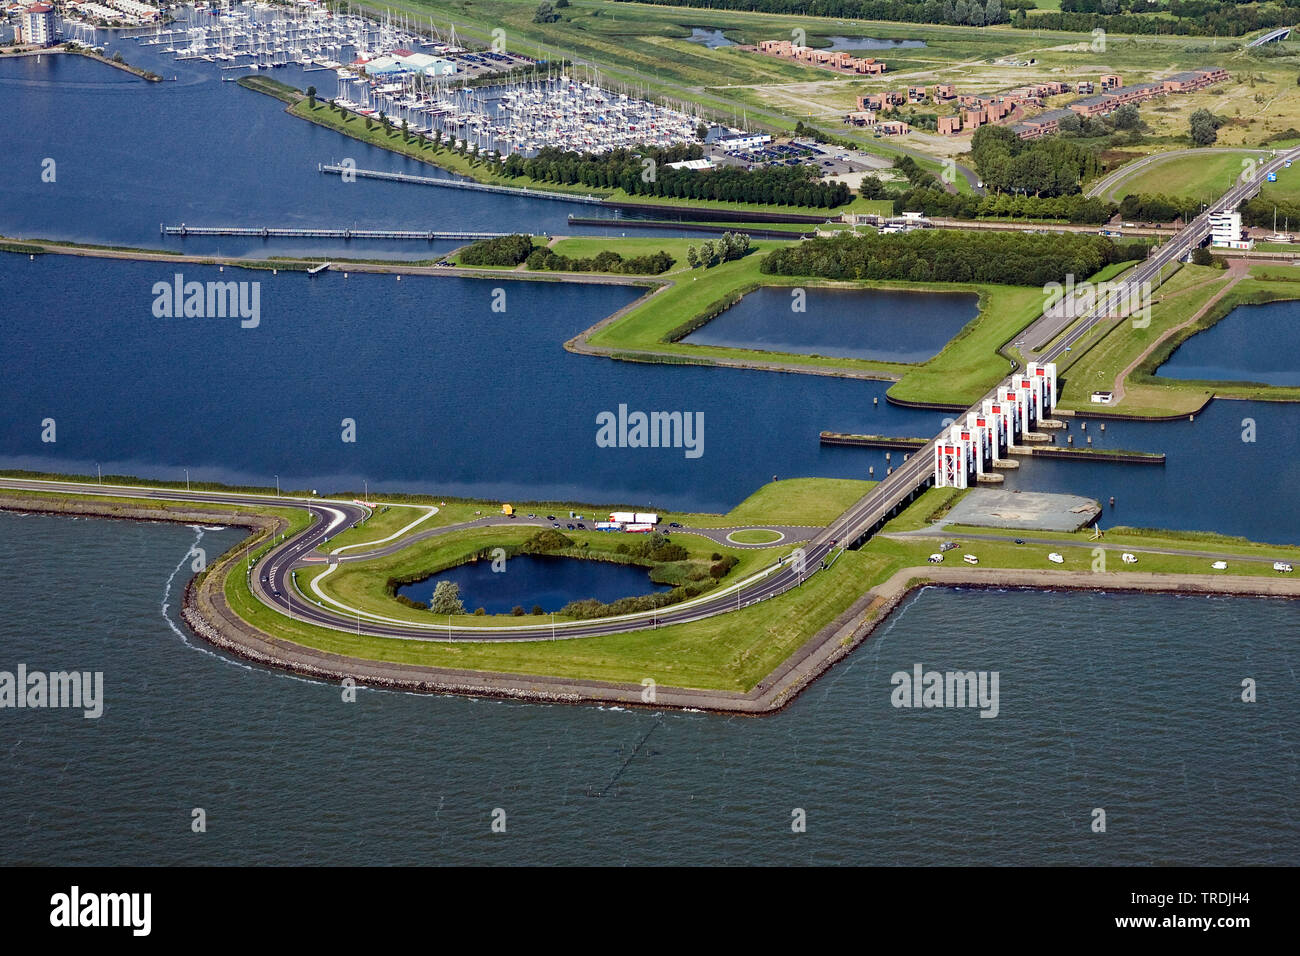 Markemeer Markerwaardijk entre et Ijsselmeer à Lelystadt, photo aérienne, Pays-Bas, Pays Bas du Nord, Lalystad Banque D'Images